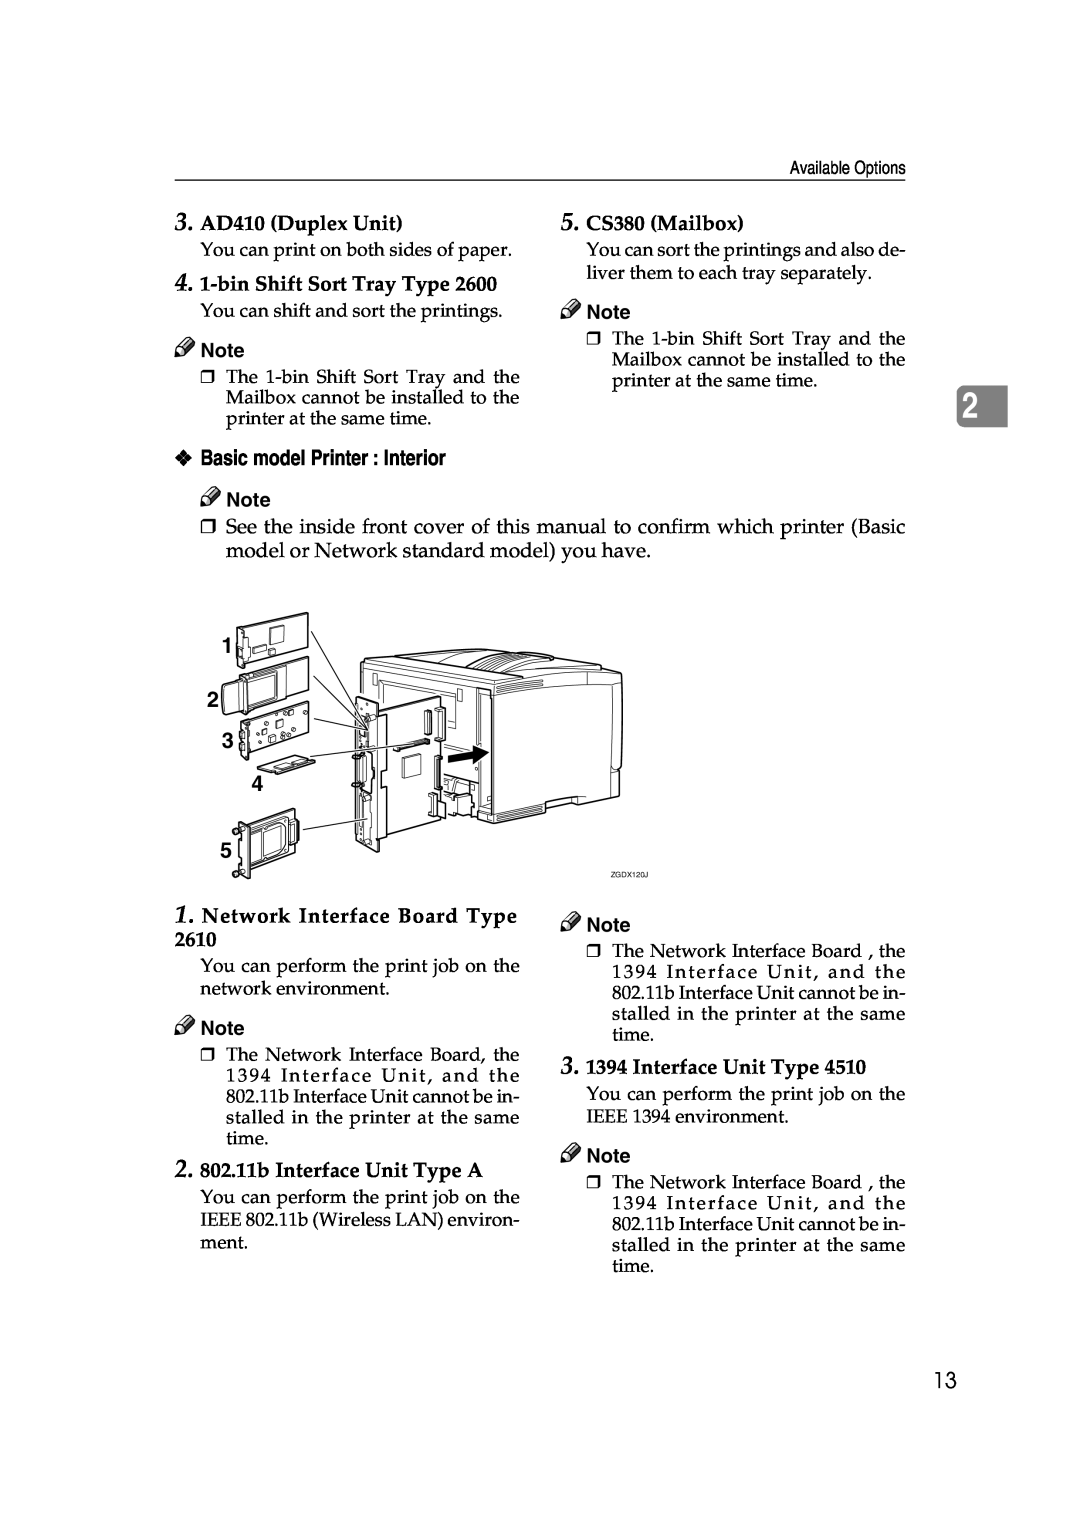 Ricoh AP2610, Type B Basic model Printer Interior, 3. AD410 Duplex Unit, 4. 1-bin Shift Sort Tray Type, 5. CS380 Mailbox 